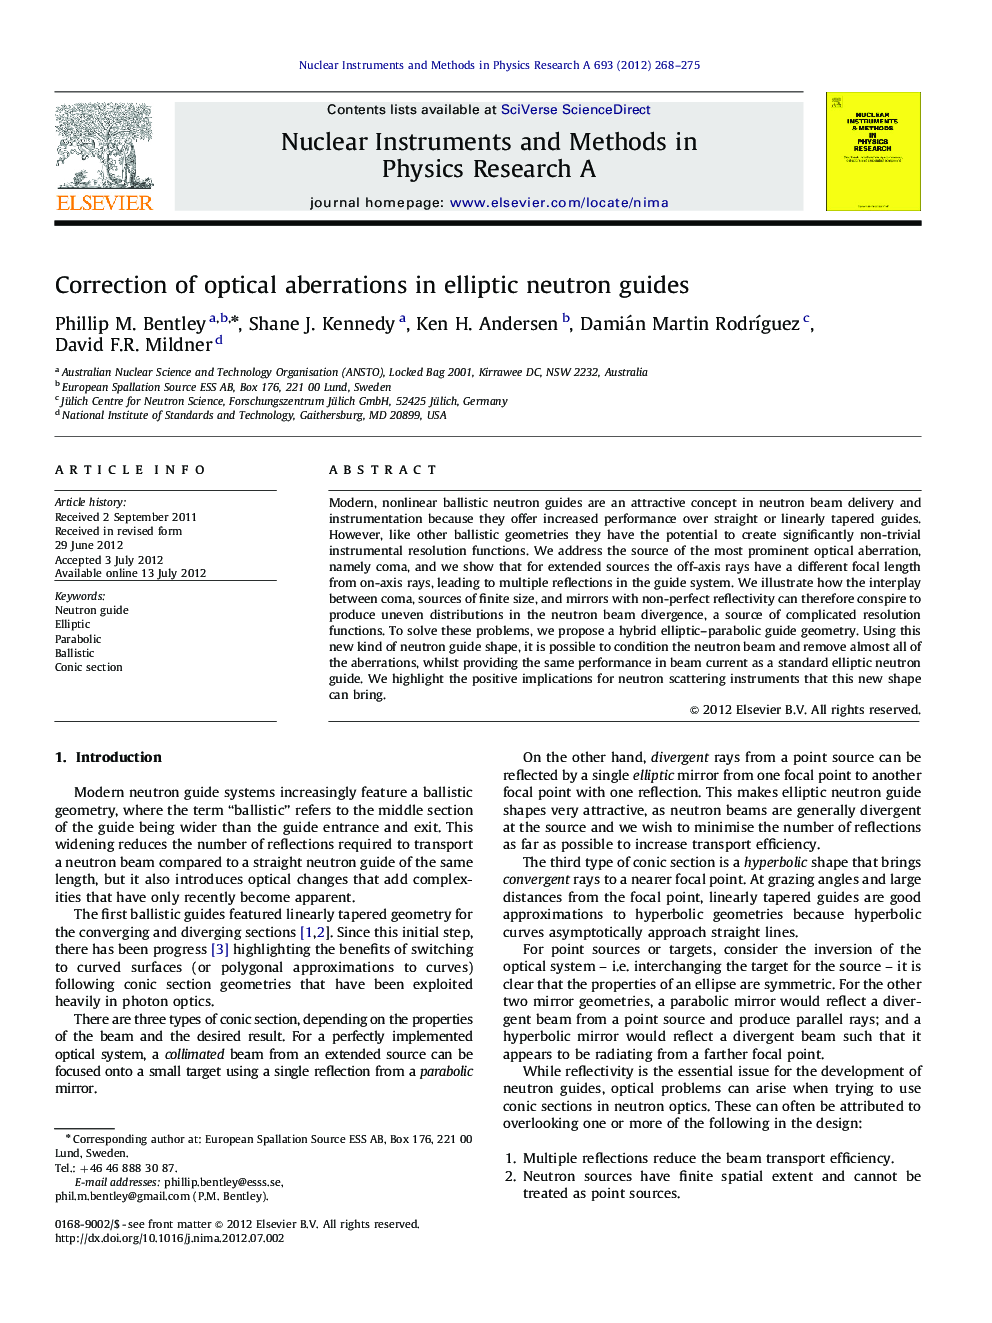 Correction of optical aberrations in elliptic neutron guides